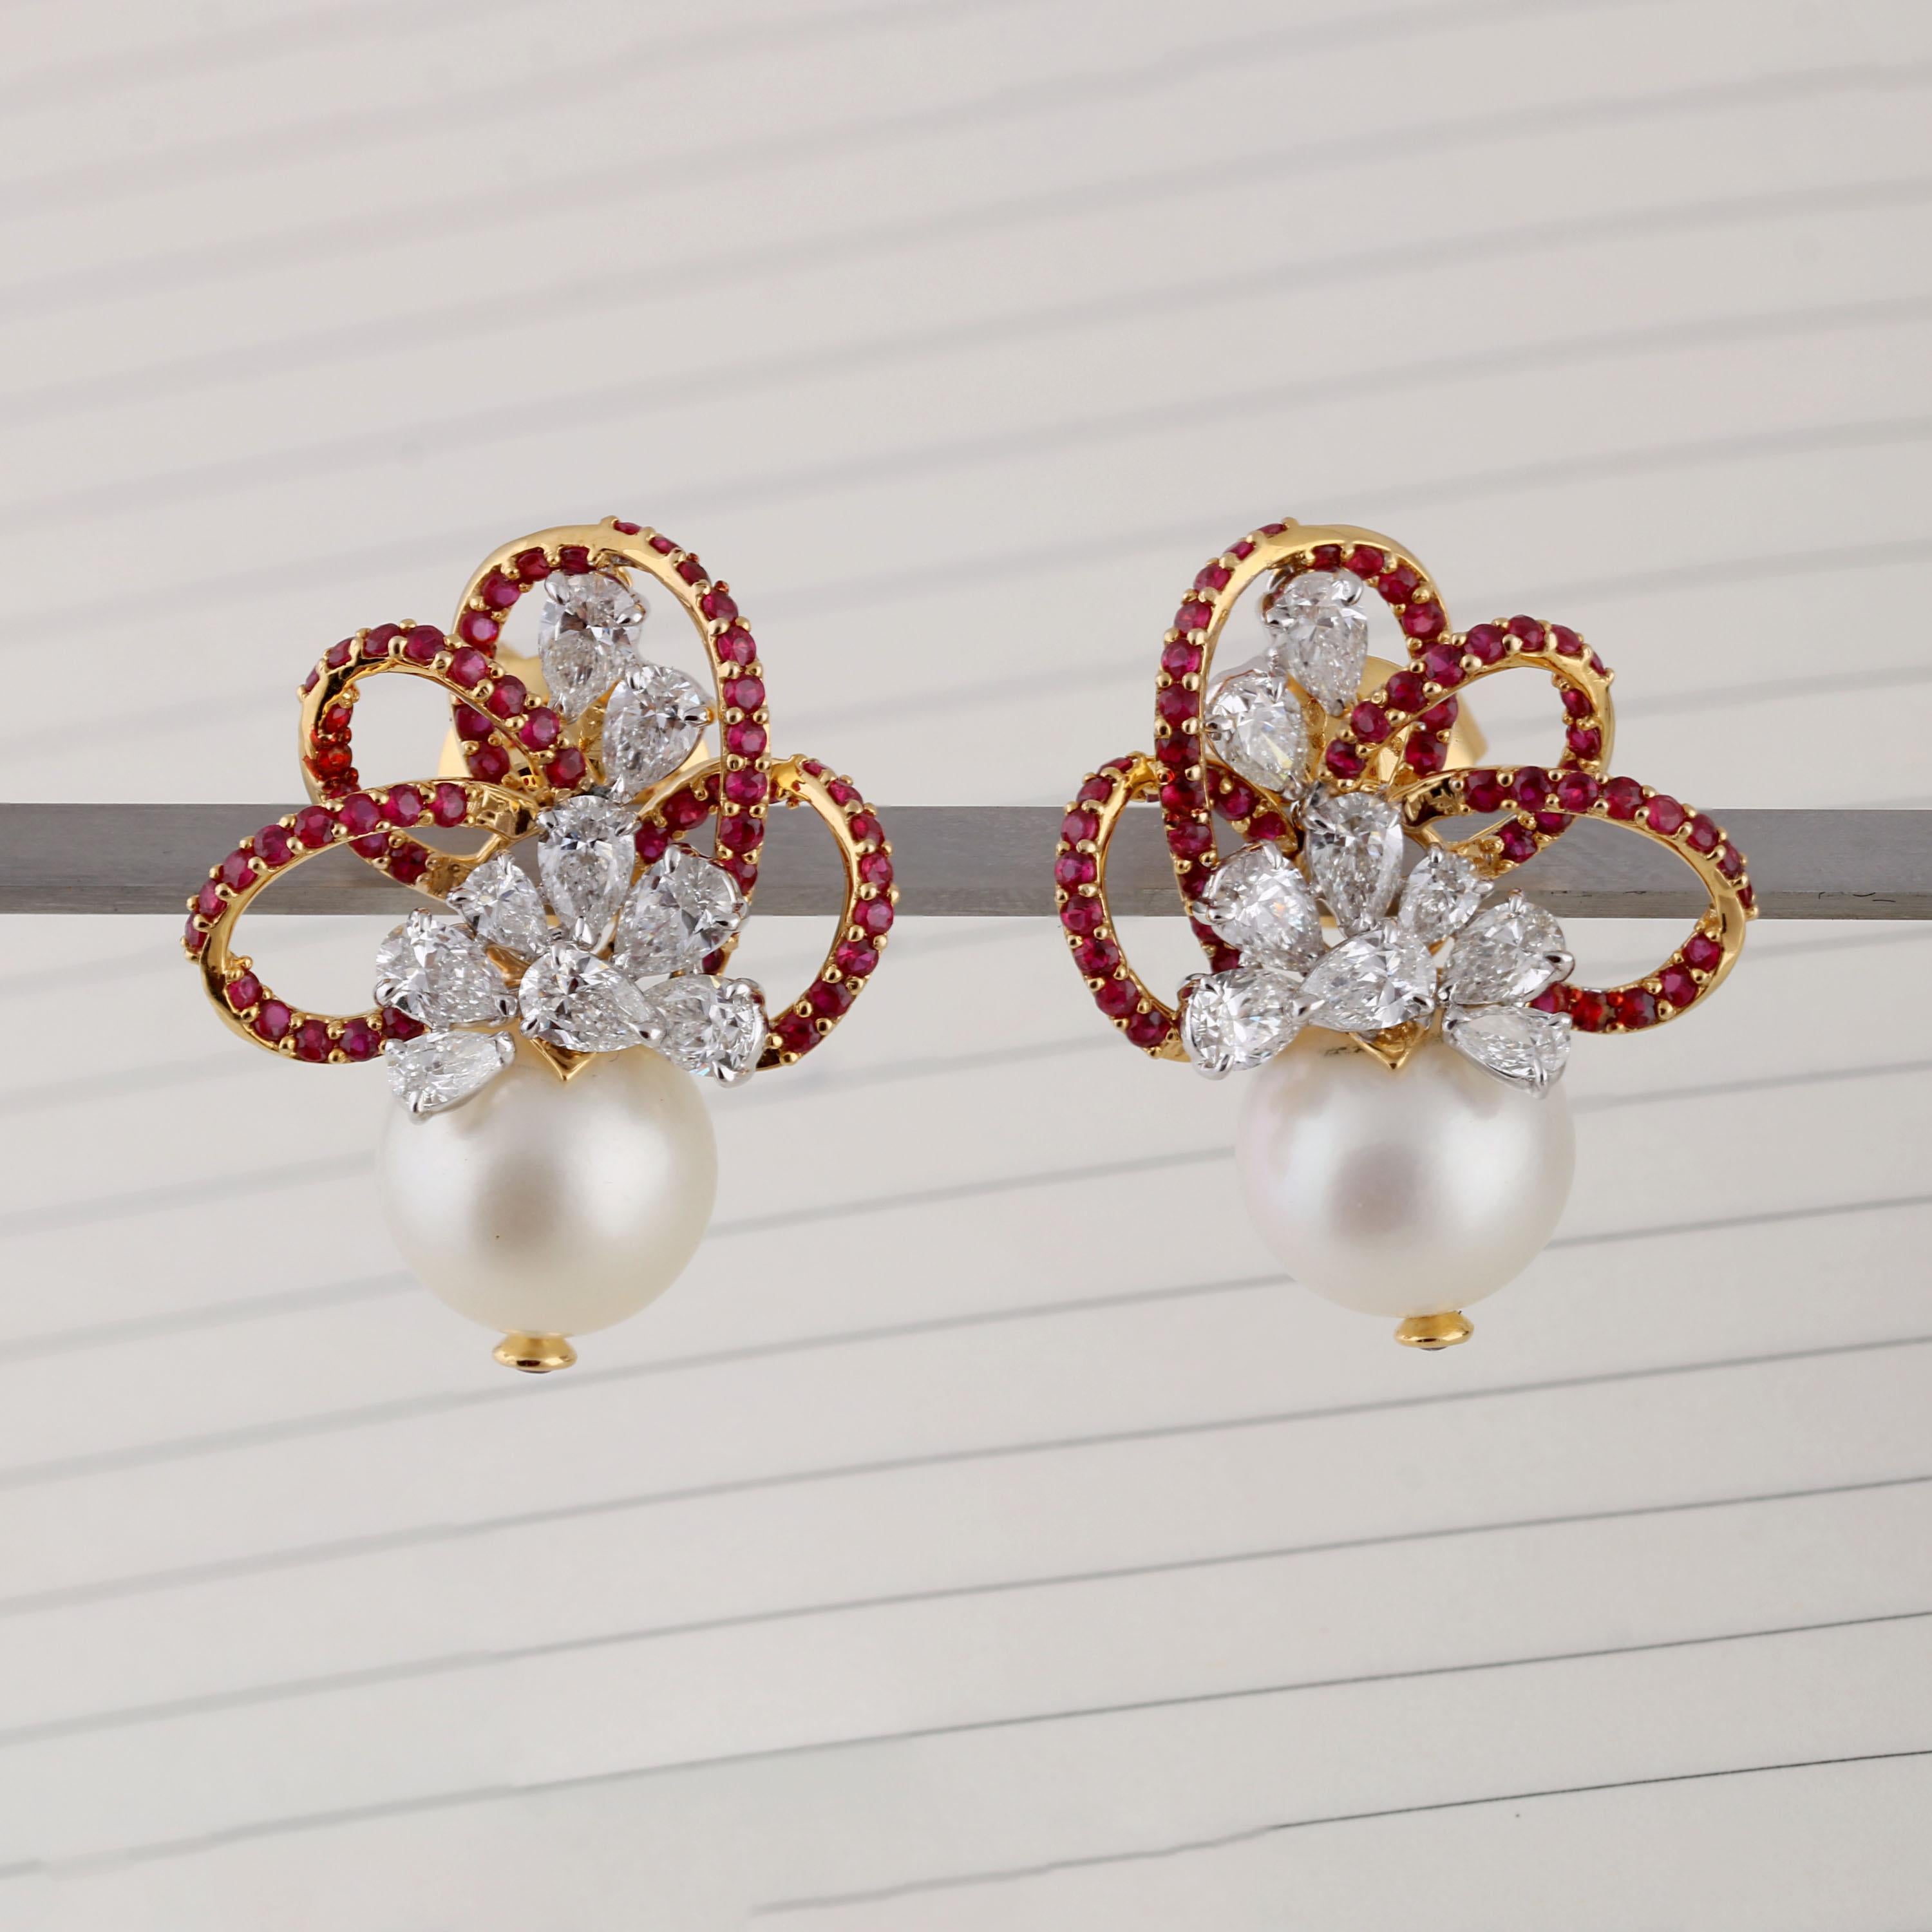 Studio Rêves Diamond and Rubies with Pearls Earrings in 18 Karat Gold For Sale 3